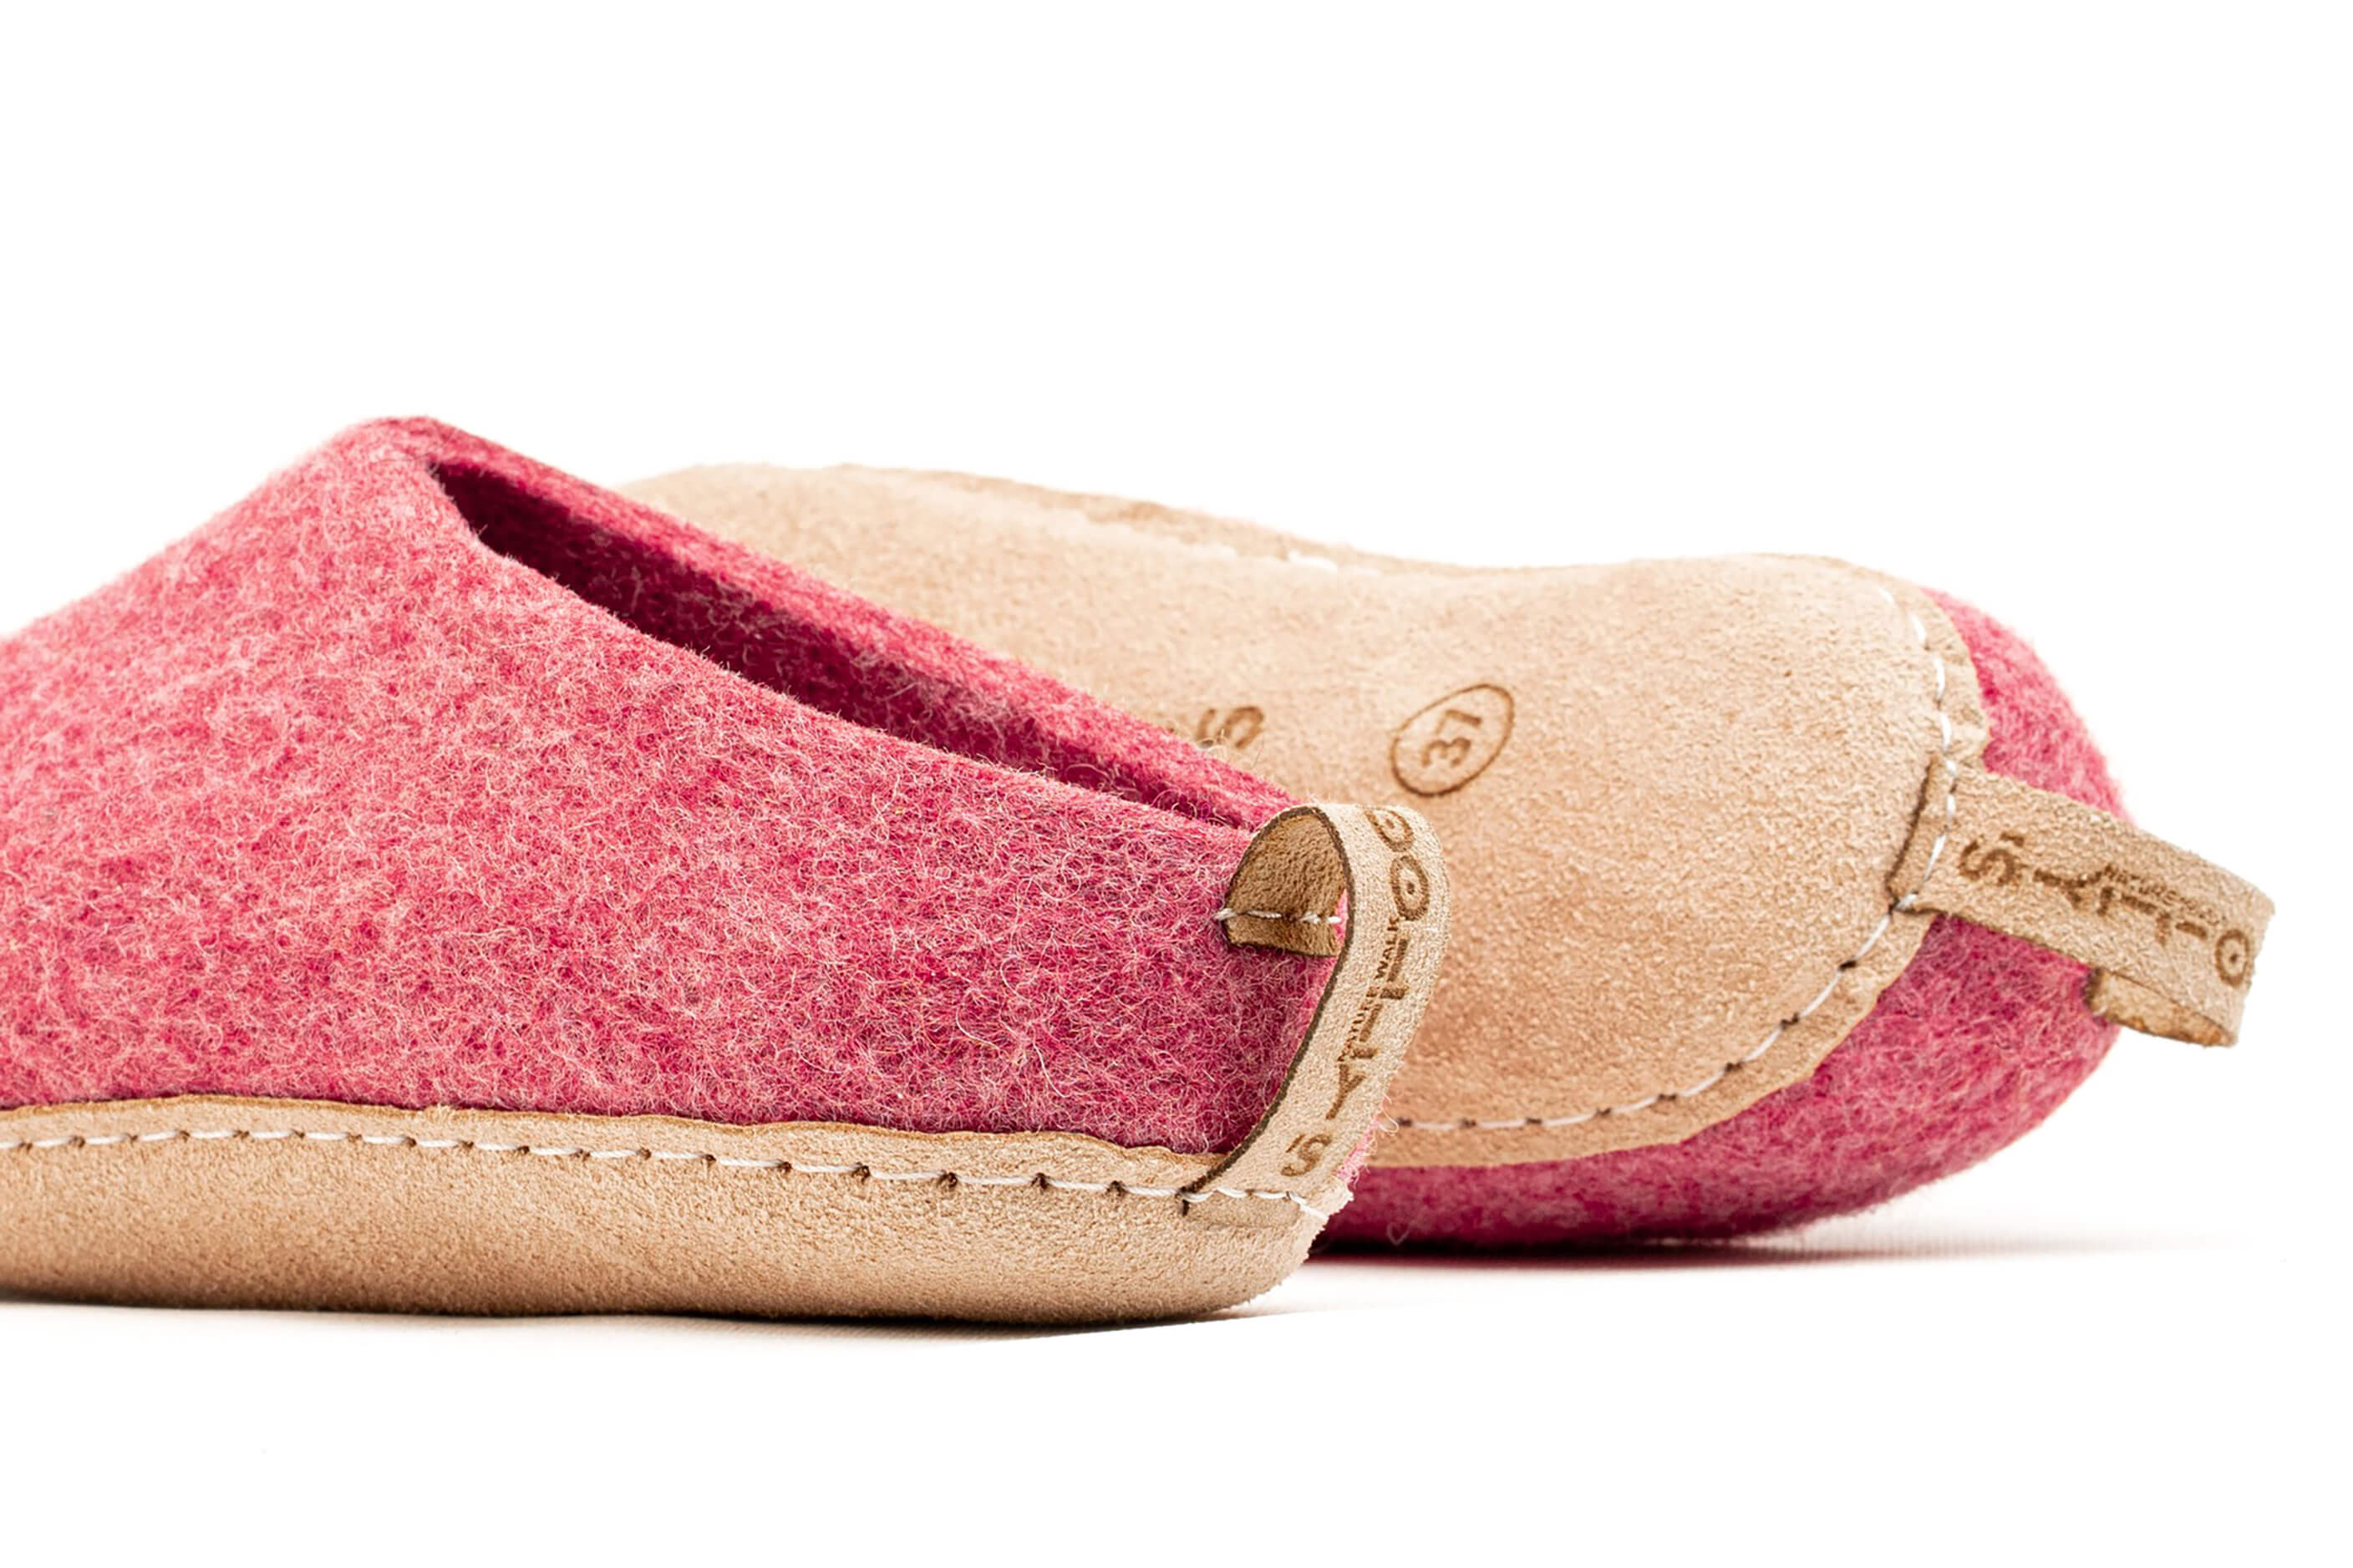 Indoor Open Heel Slippers With Leather Sole - Cherry Pink